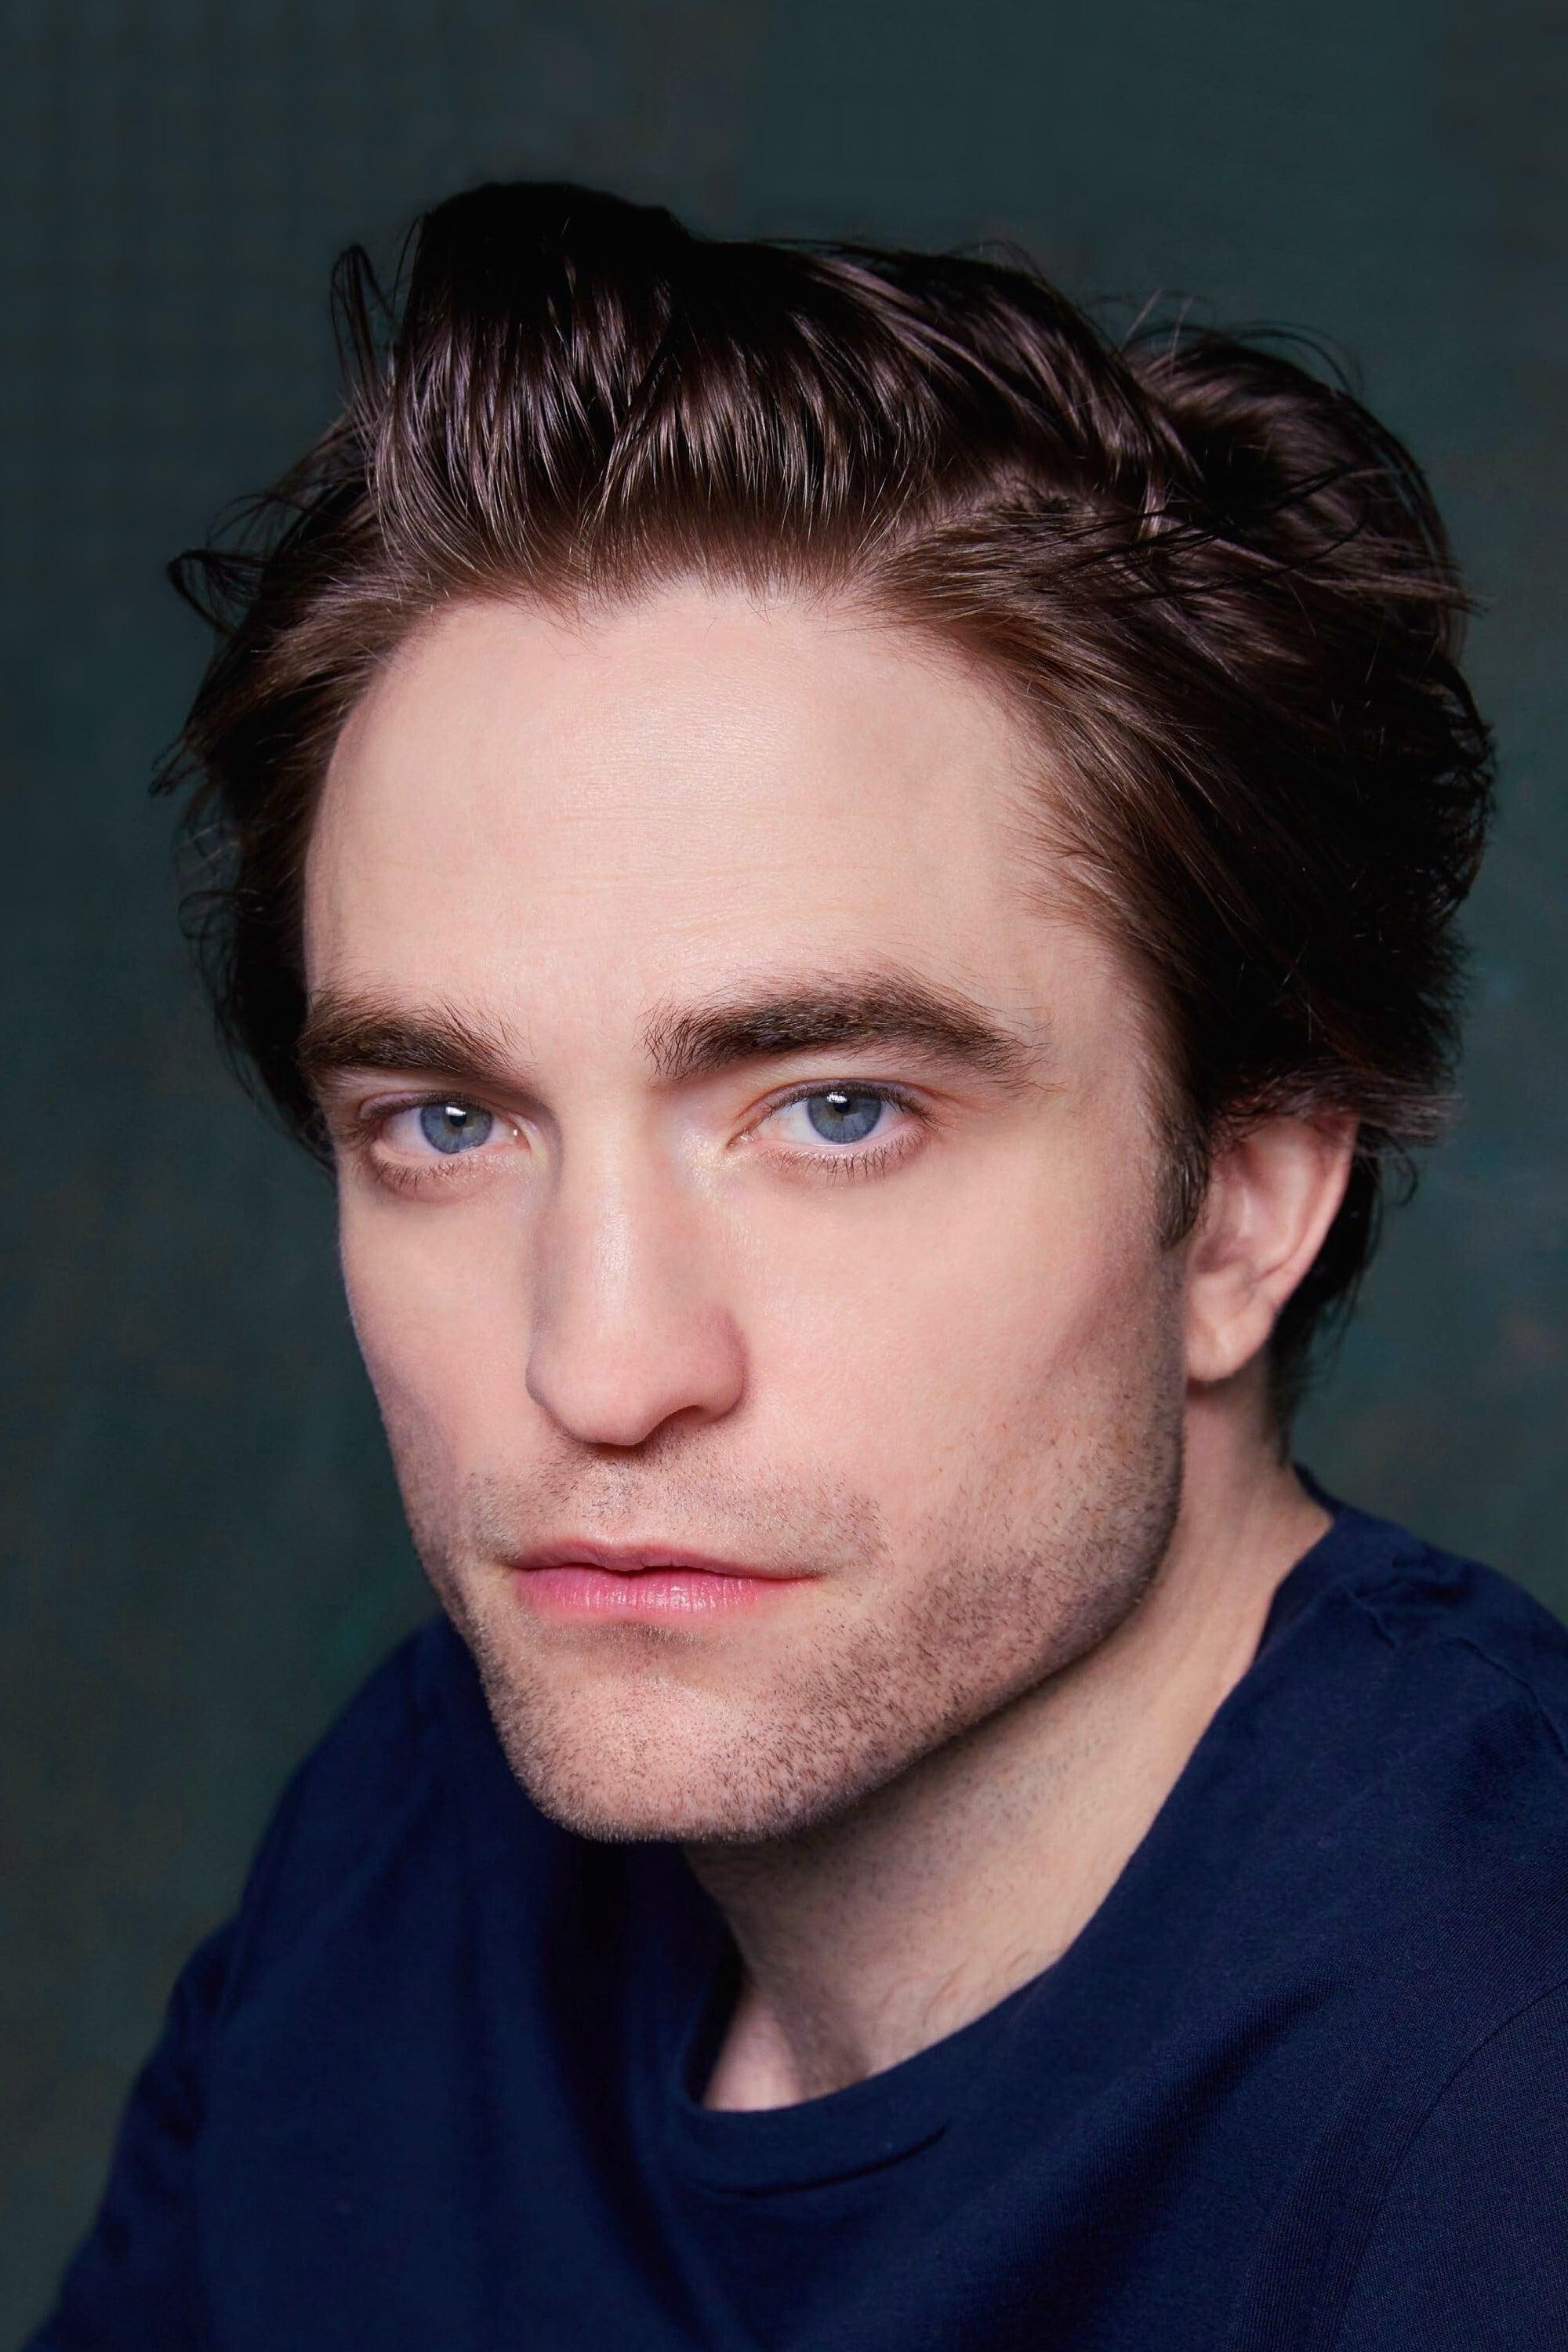 Robert Pattinson | T.E. Lawrence